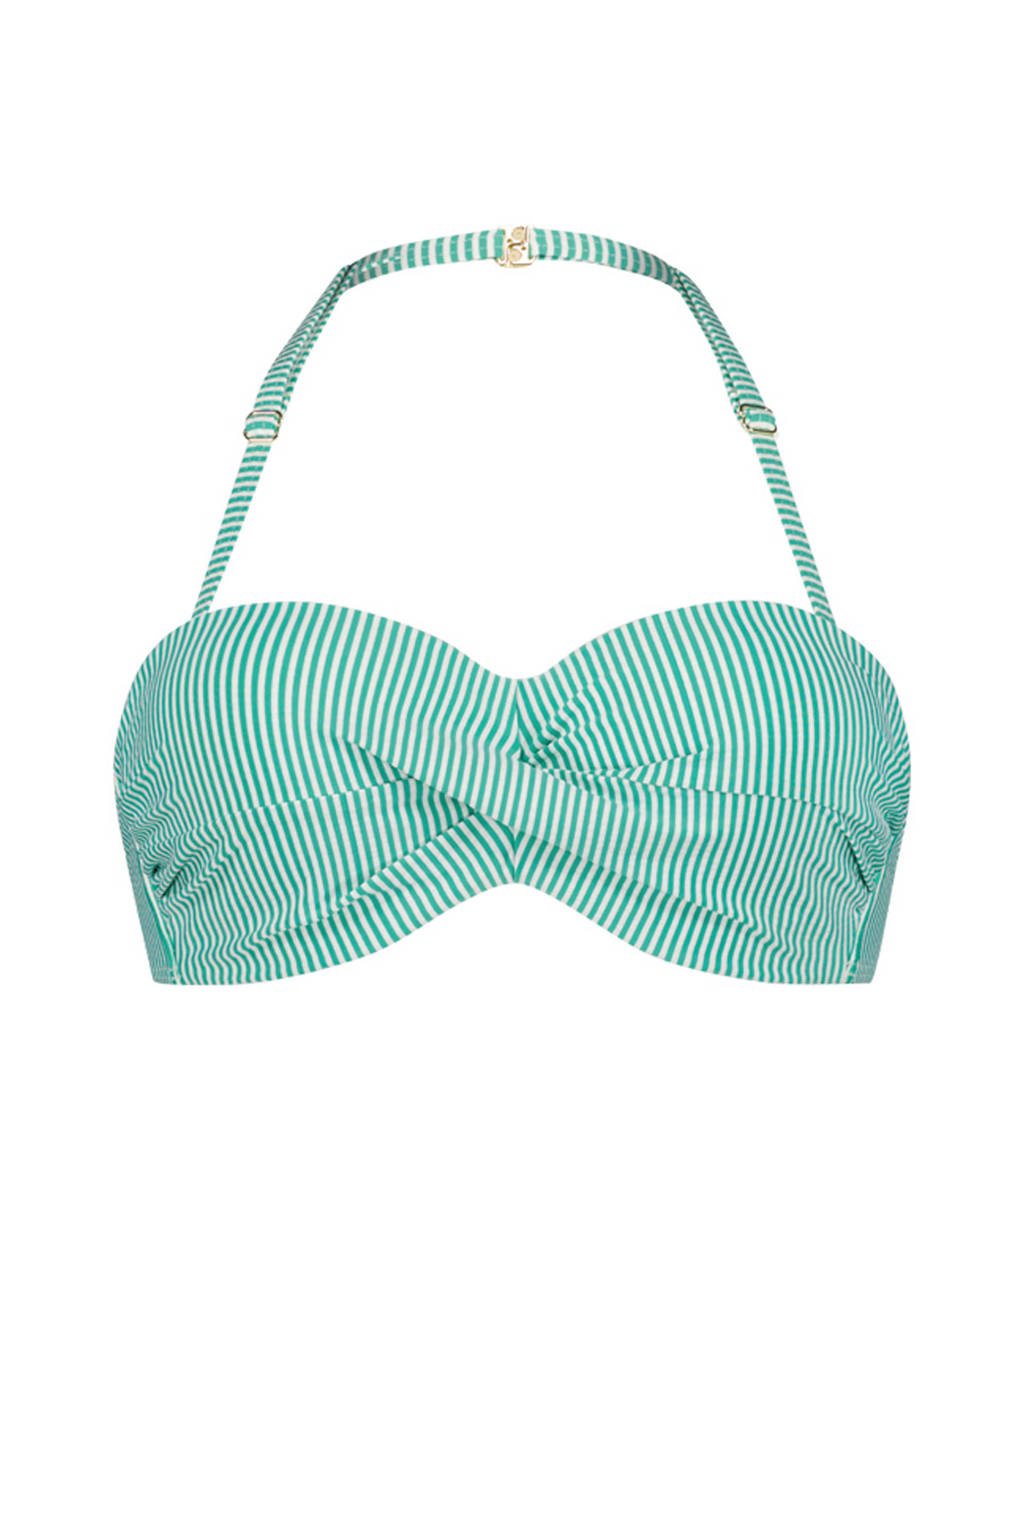 Cyell gestreepte strapless bandeau bikinitop Sunny Vibes groen/wit